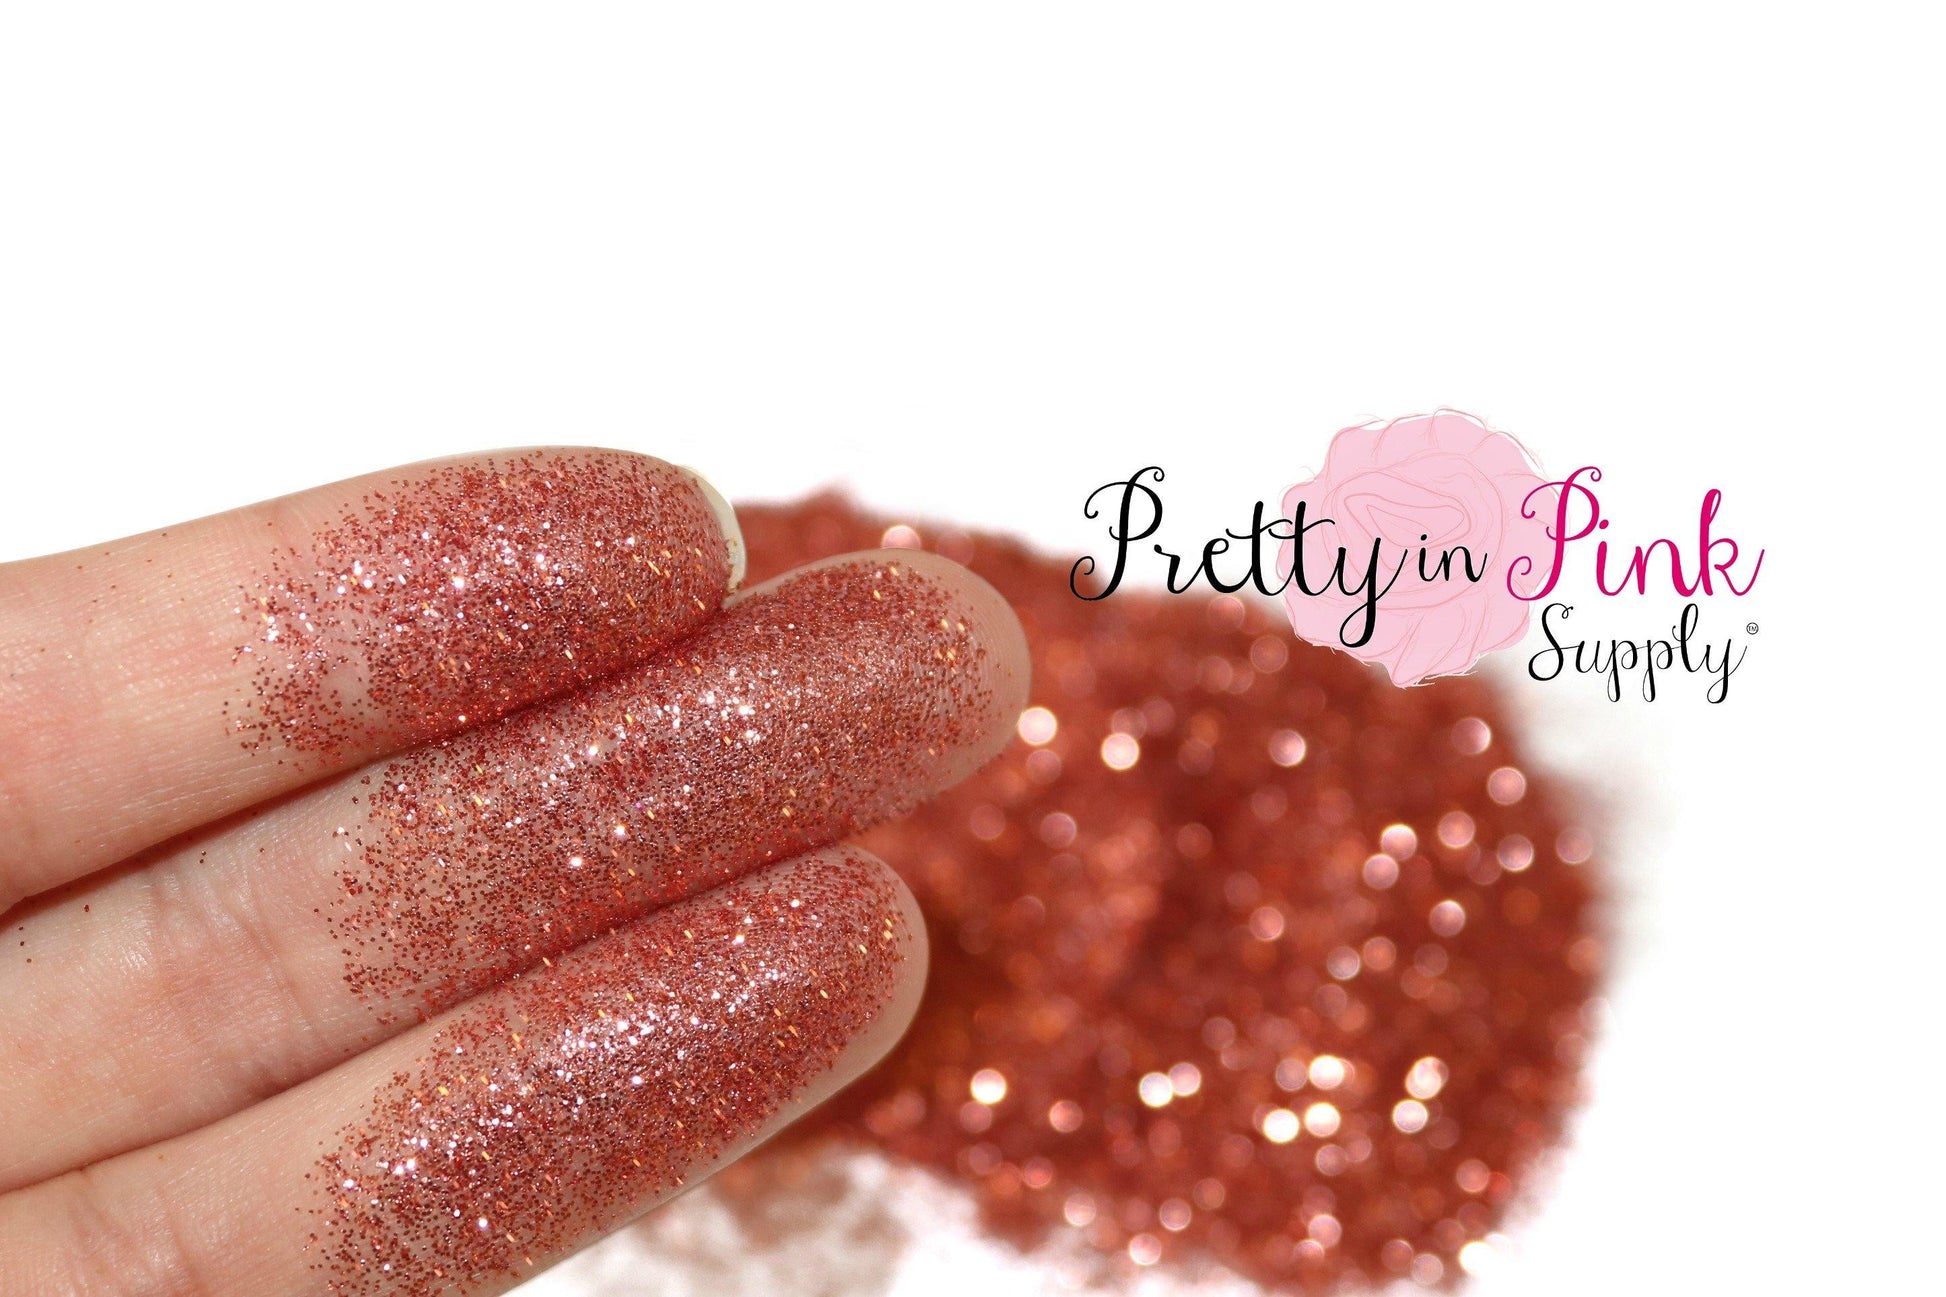 Rust Ultra Fine Glitter - Pretty in Pink Supply